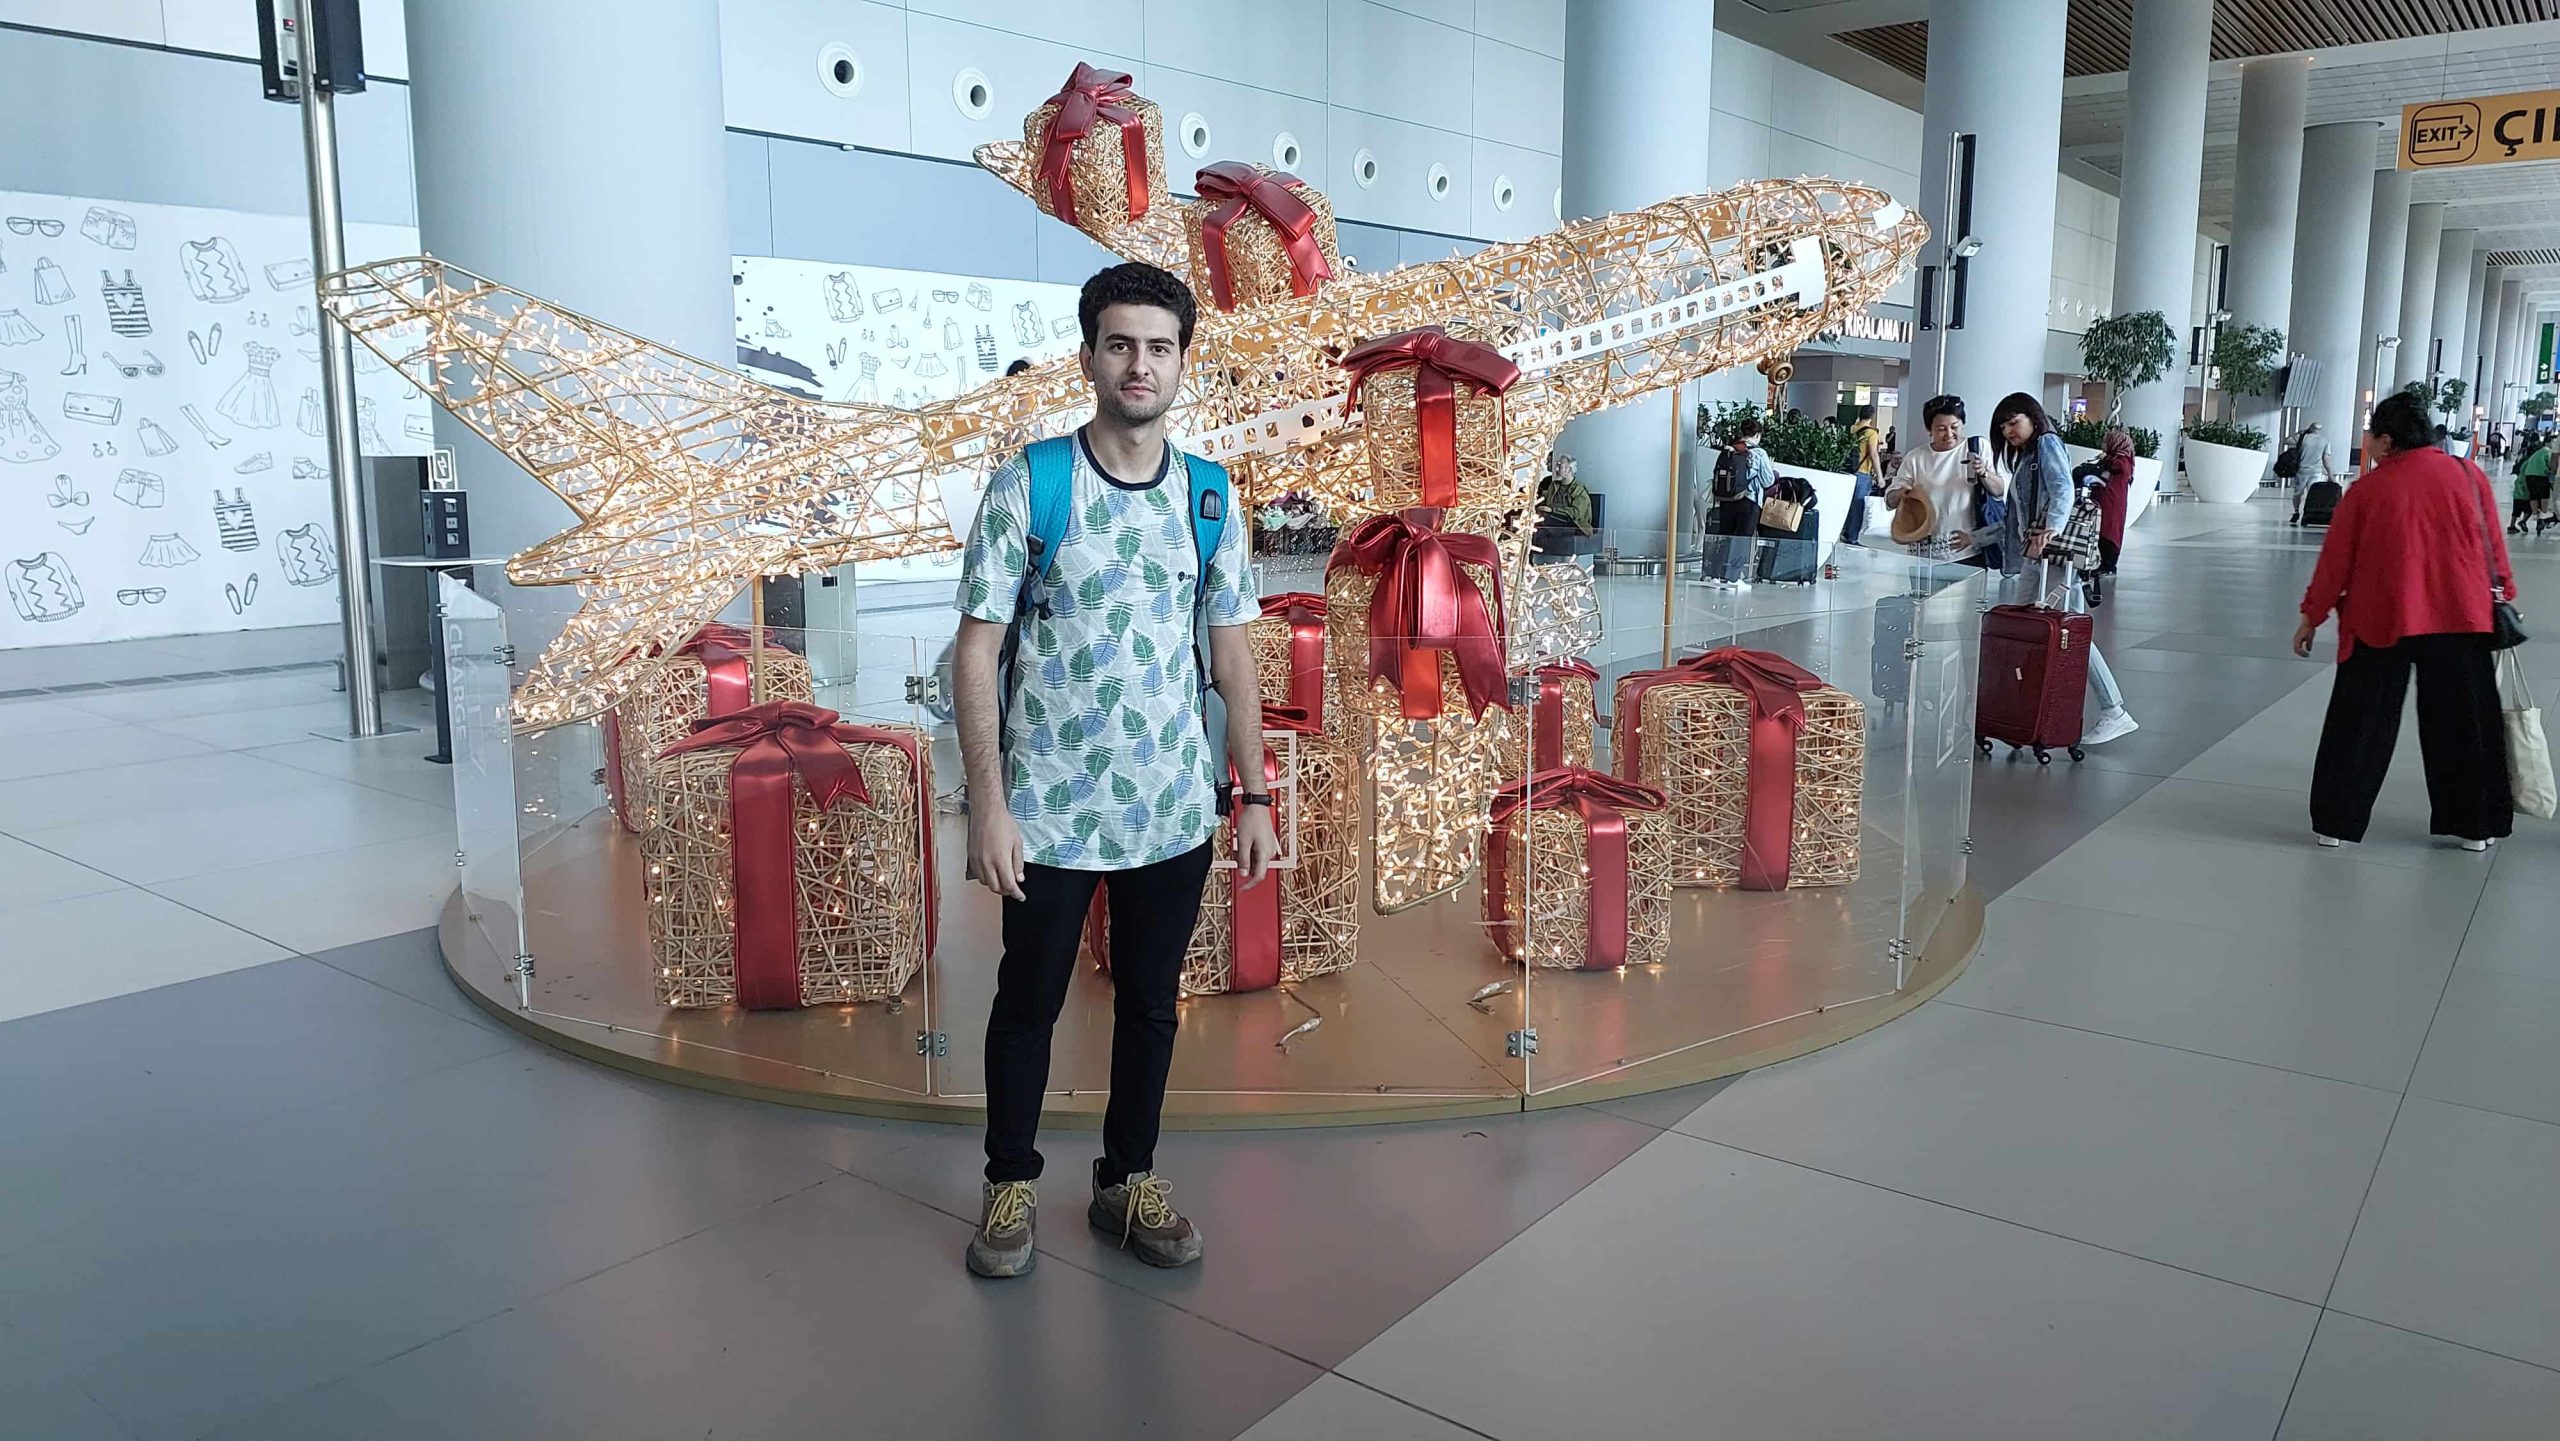 Sina Kazemi next to the plane statue in Istanbul airport